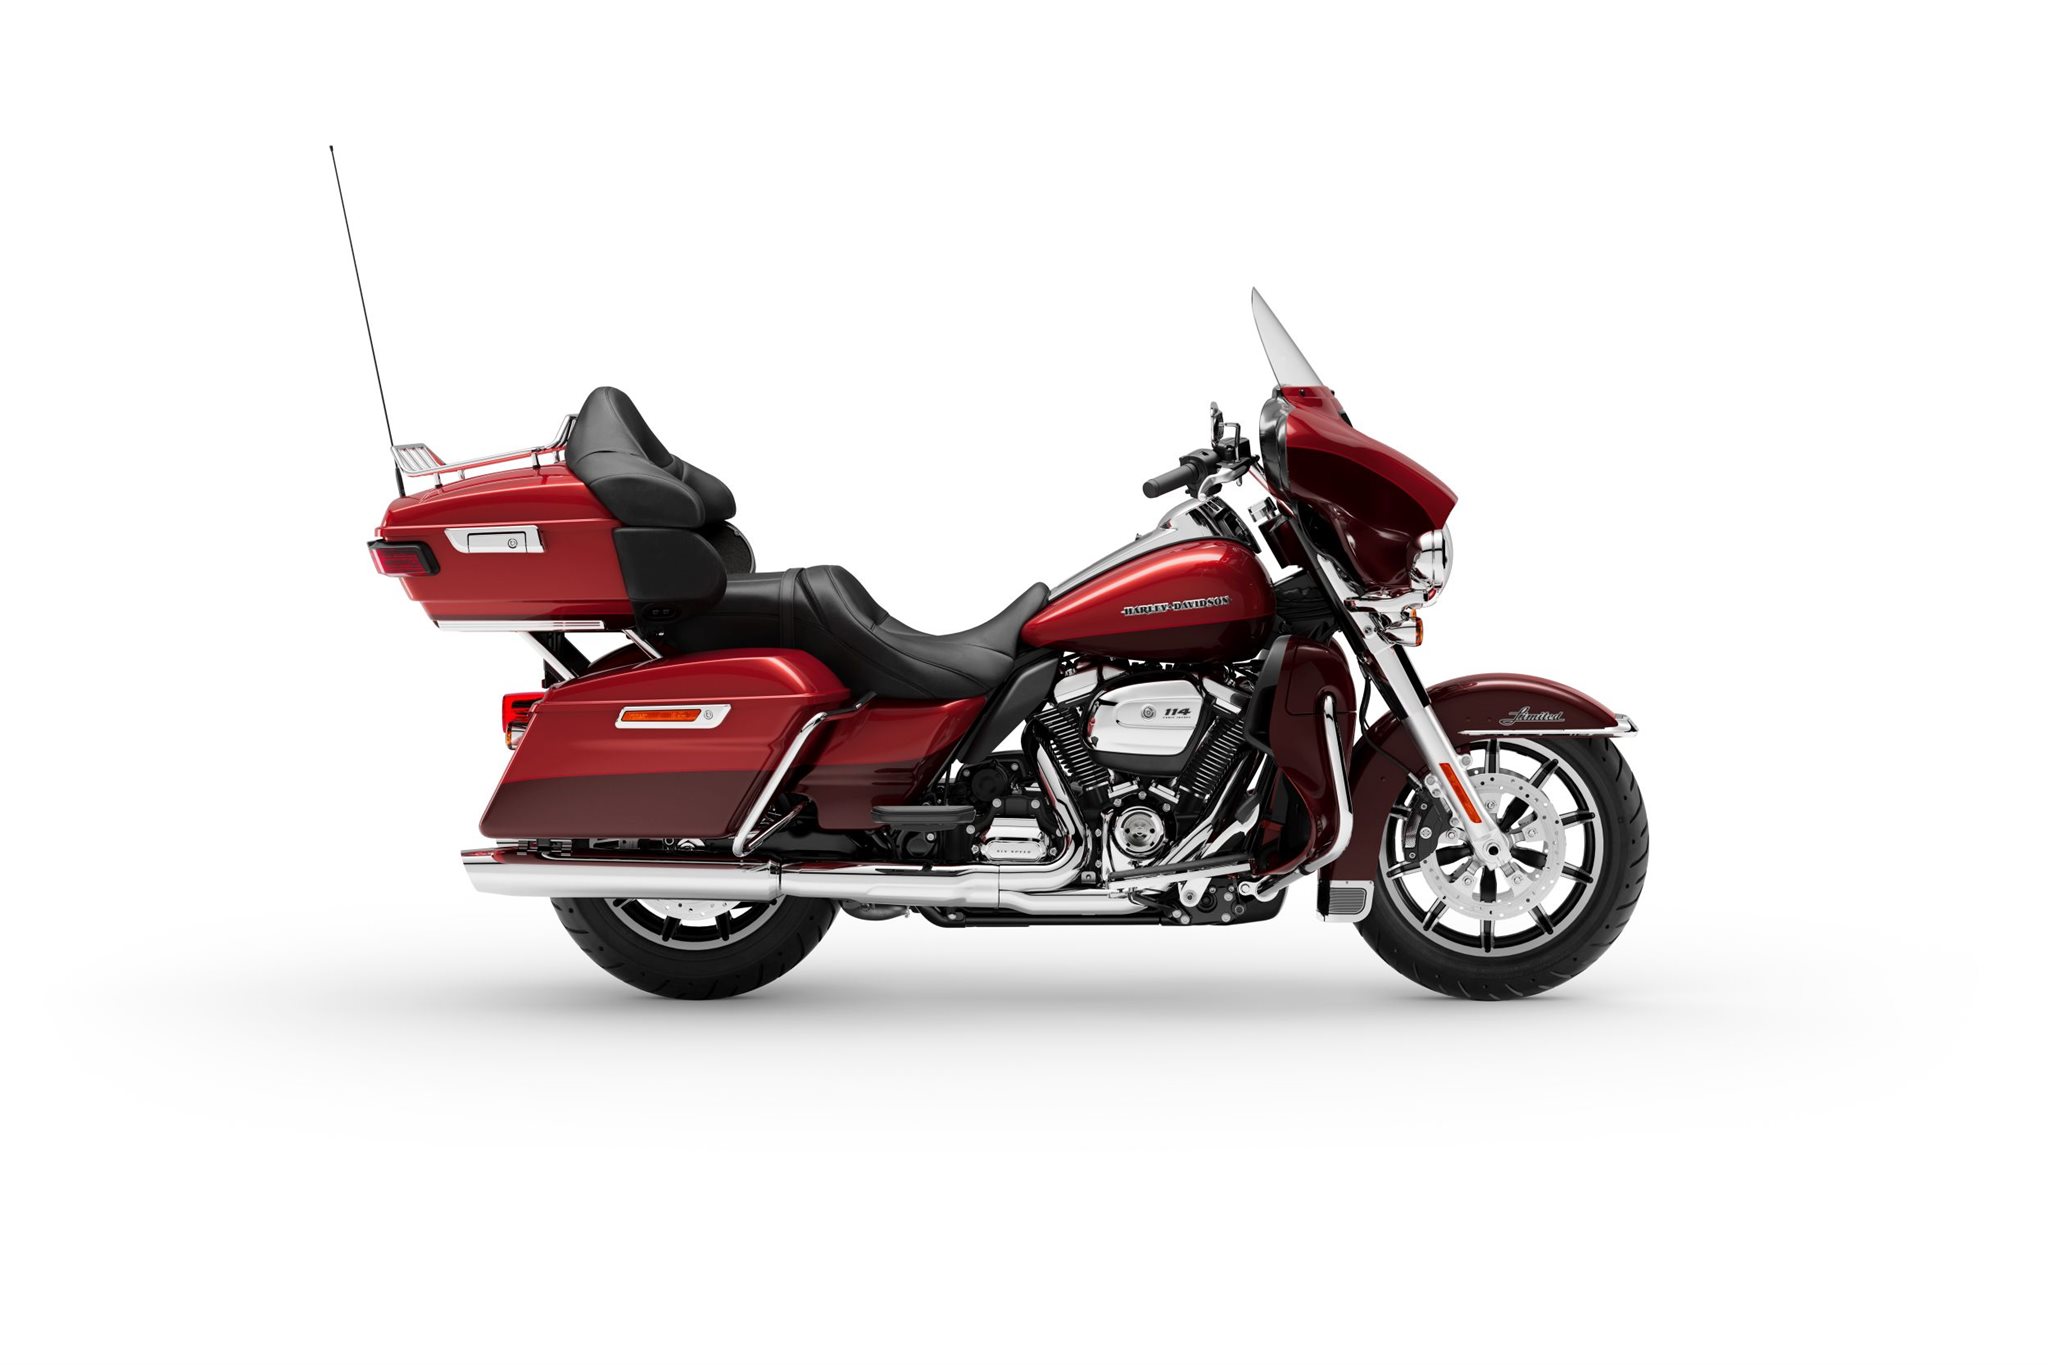 Motorrad Vergleich Harley Davidson Touring Electra Glide Ultra Limited Flhtk 2019 Vs Indian Chieftain Dark Horse 2021